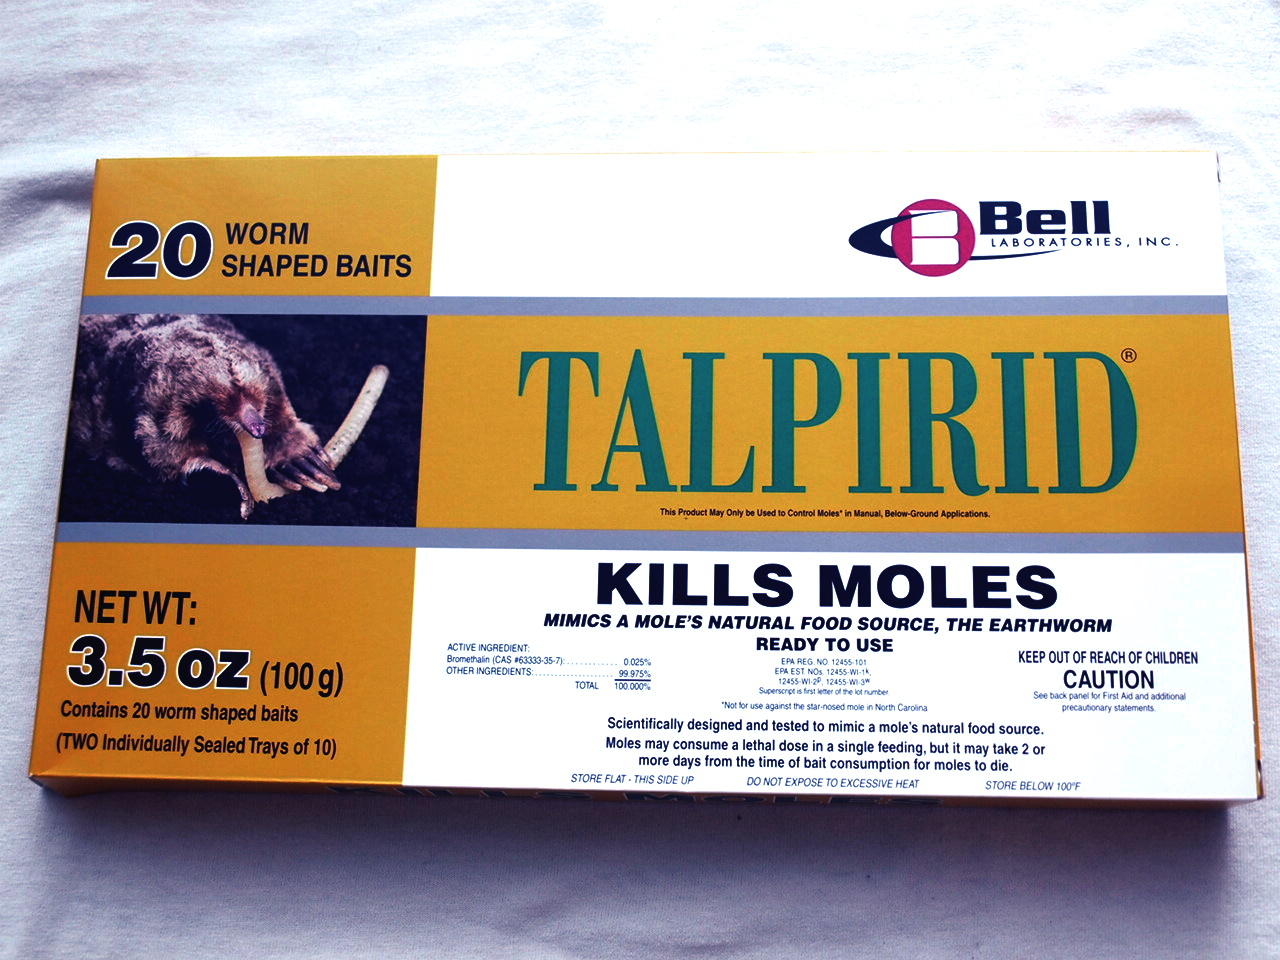 How to use the Talpirid Mole Trap